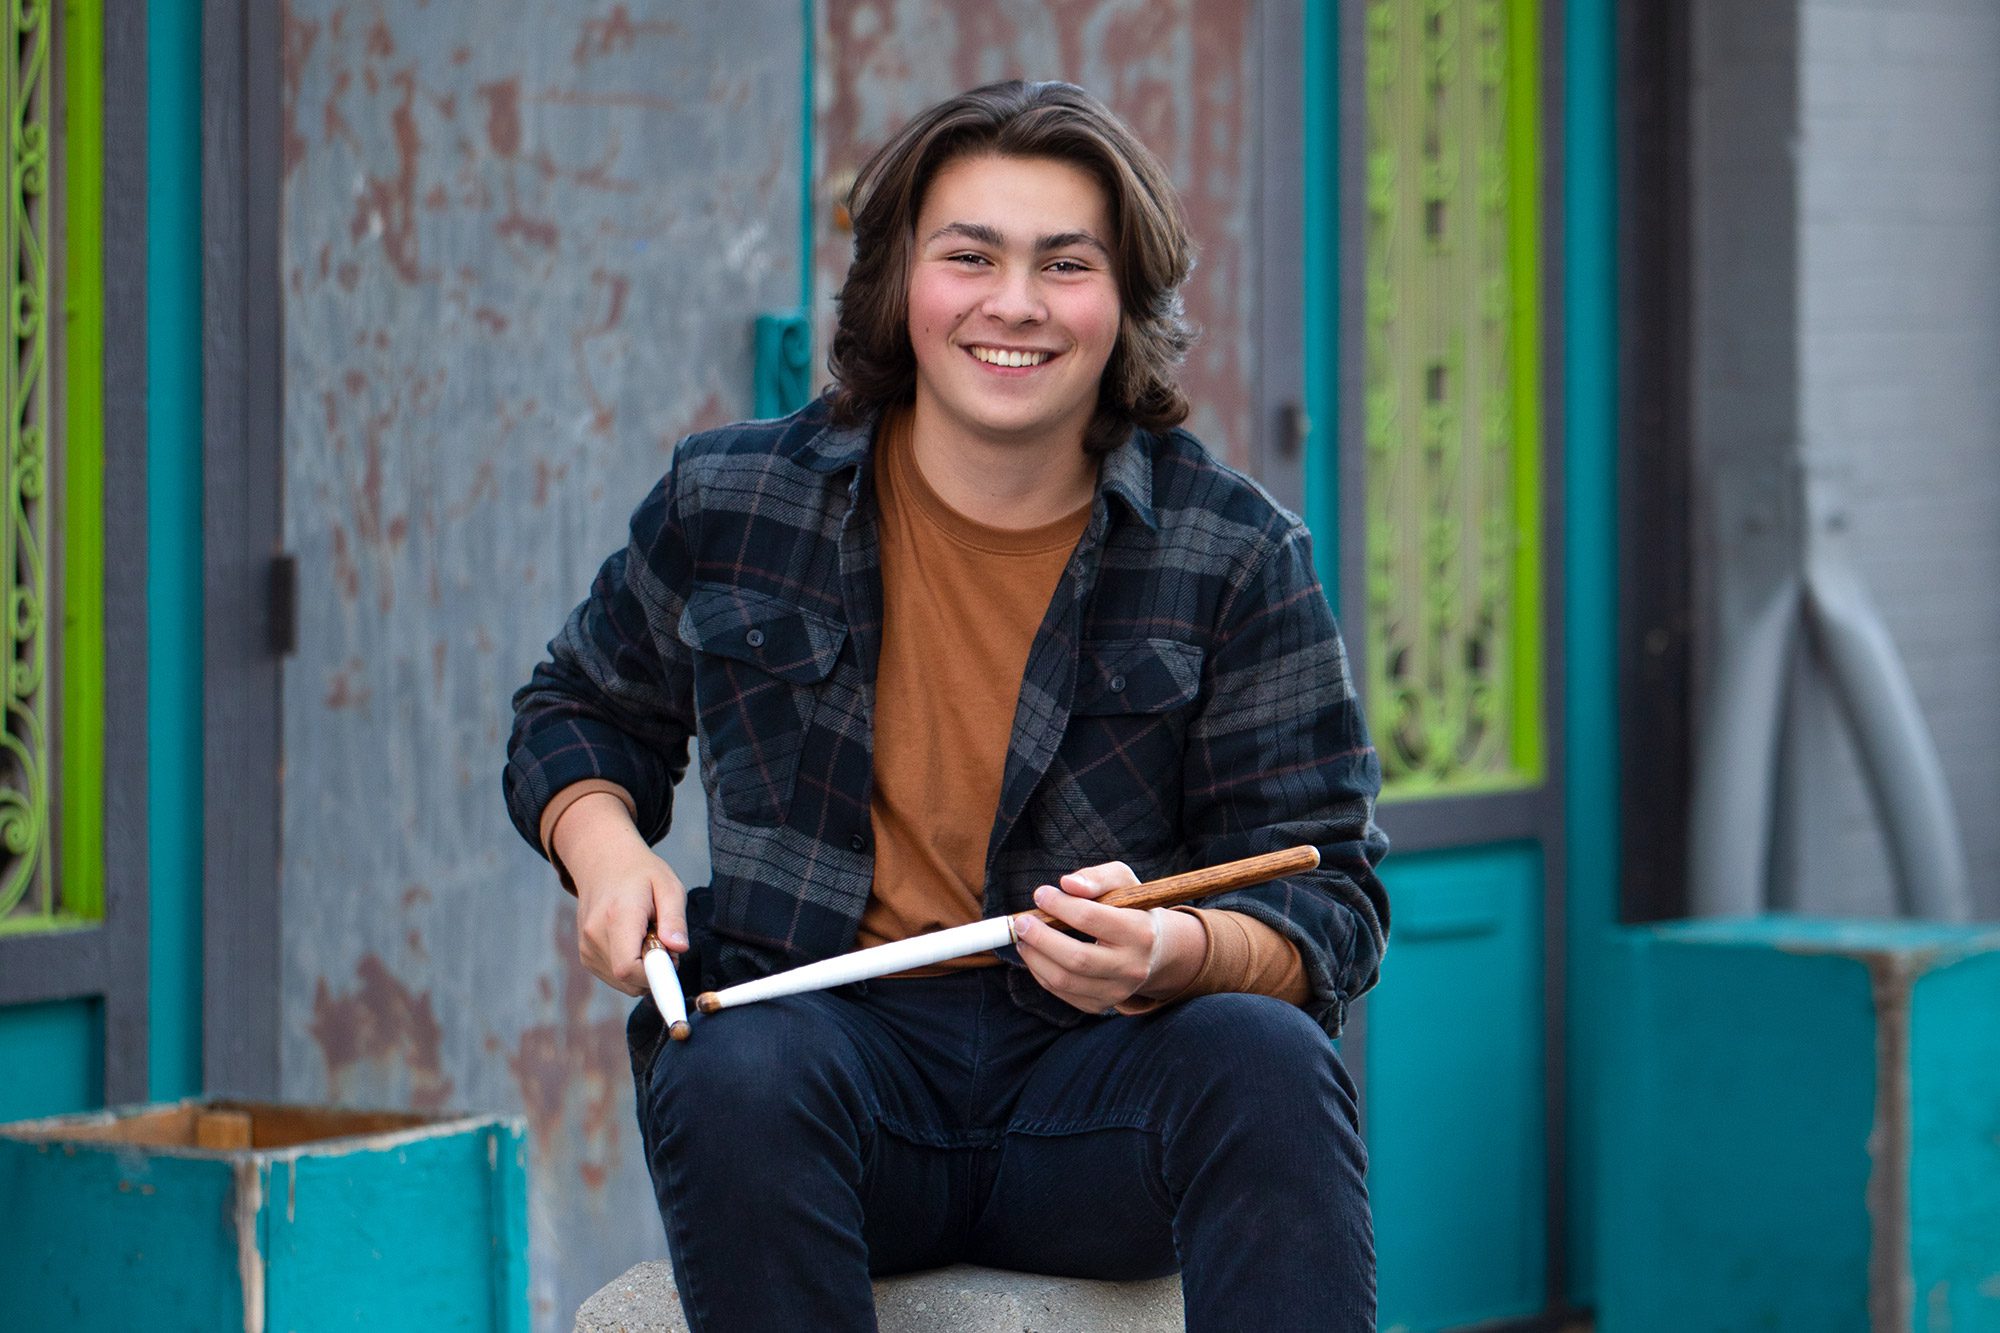 High school senior boy with drumsticks